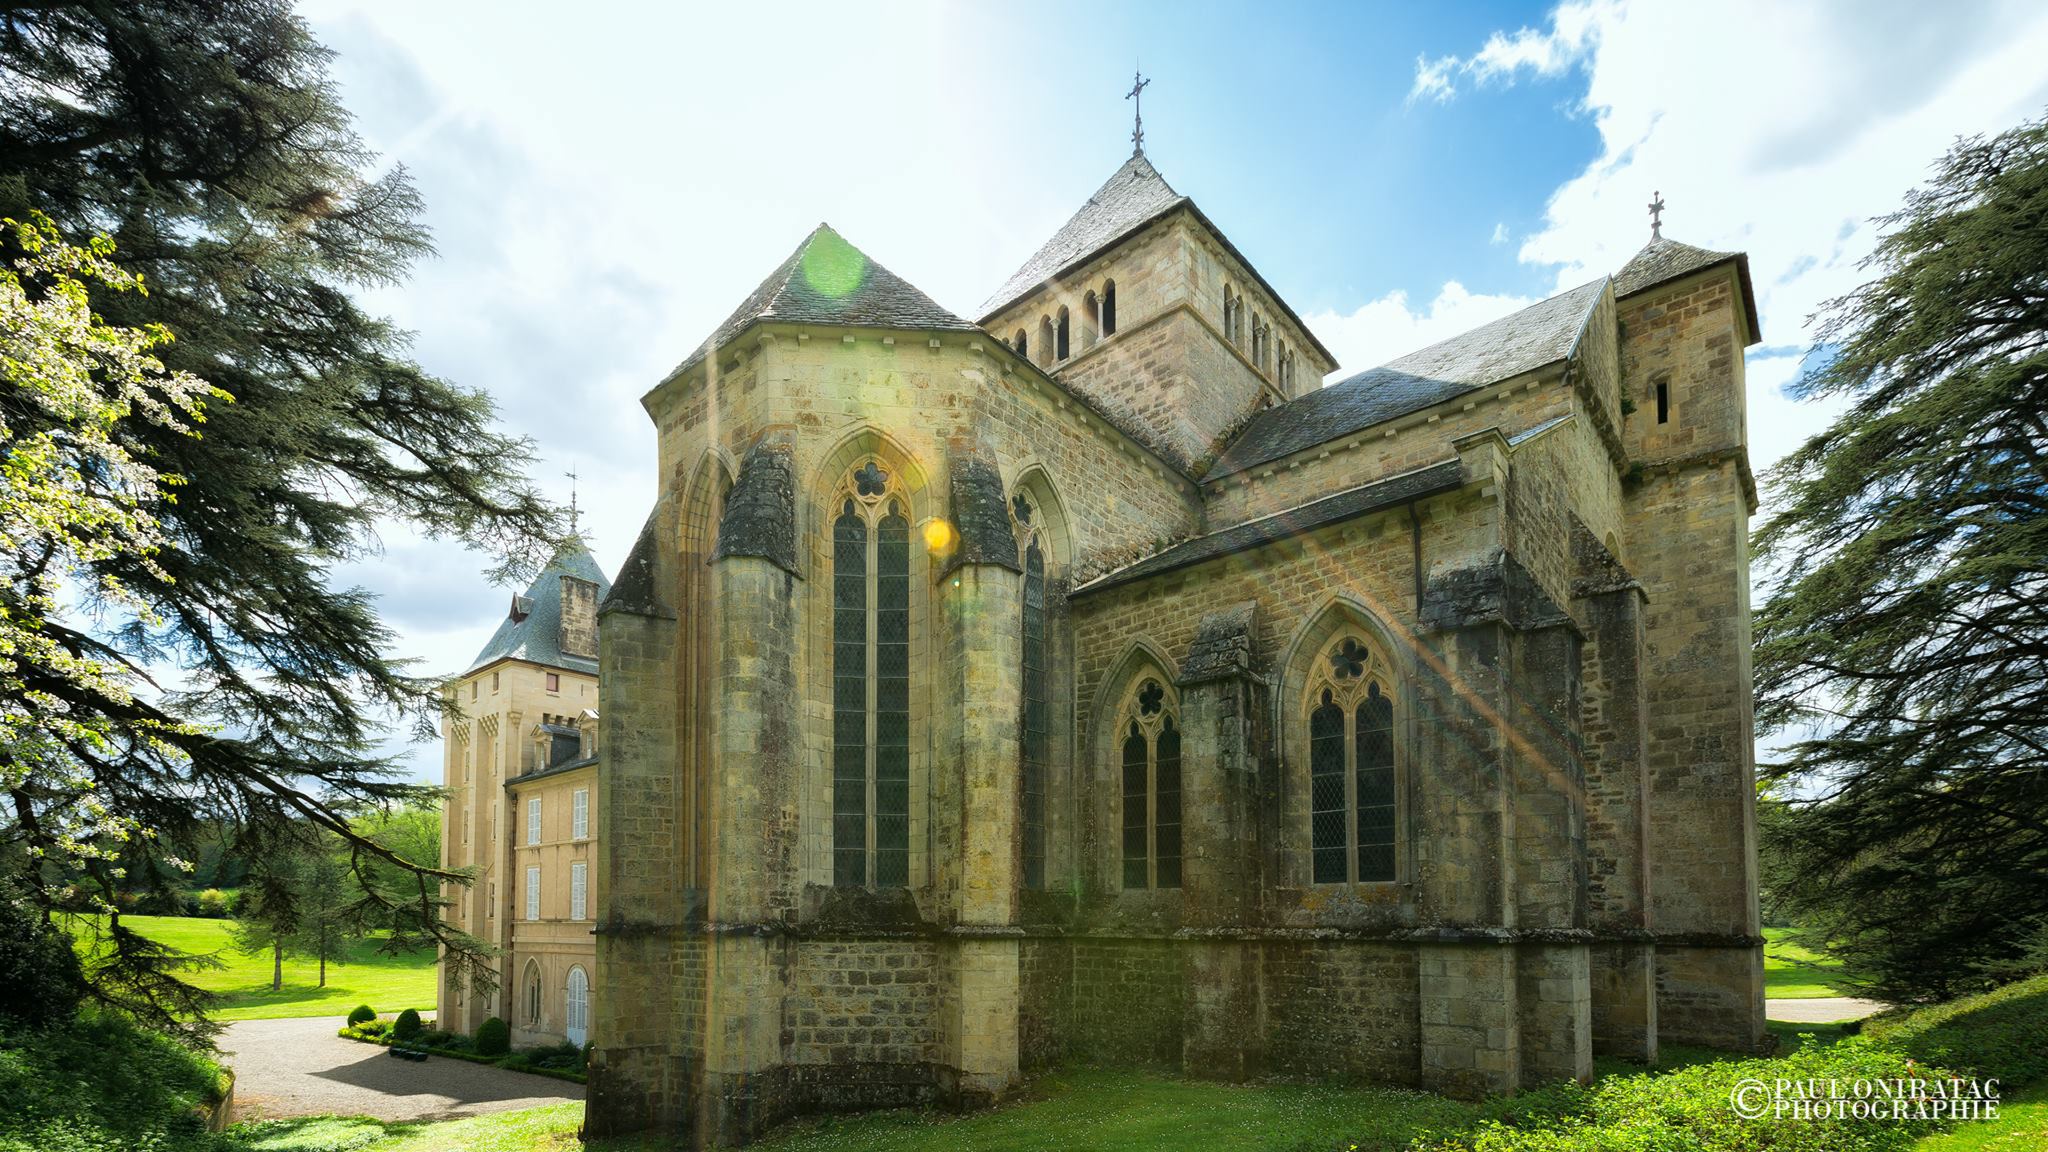 Abbaye de Loc Dieu, Aveyron © P. Oniratac